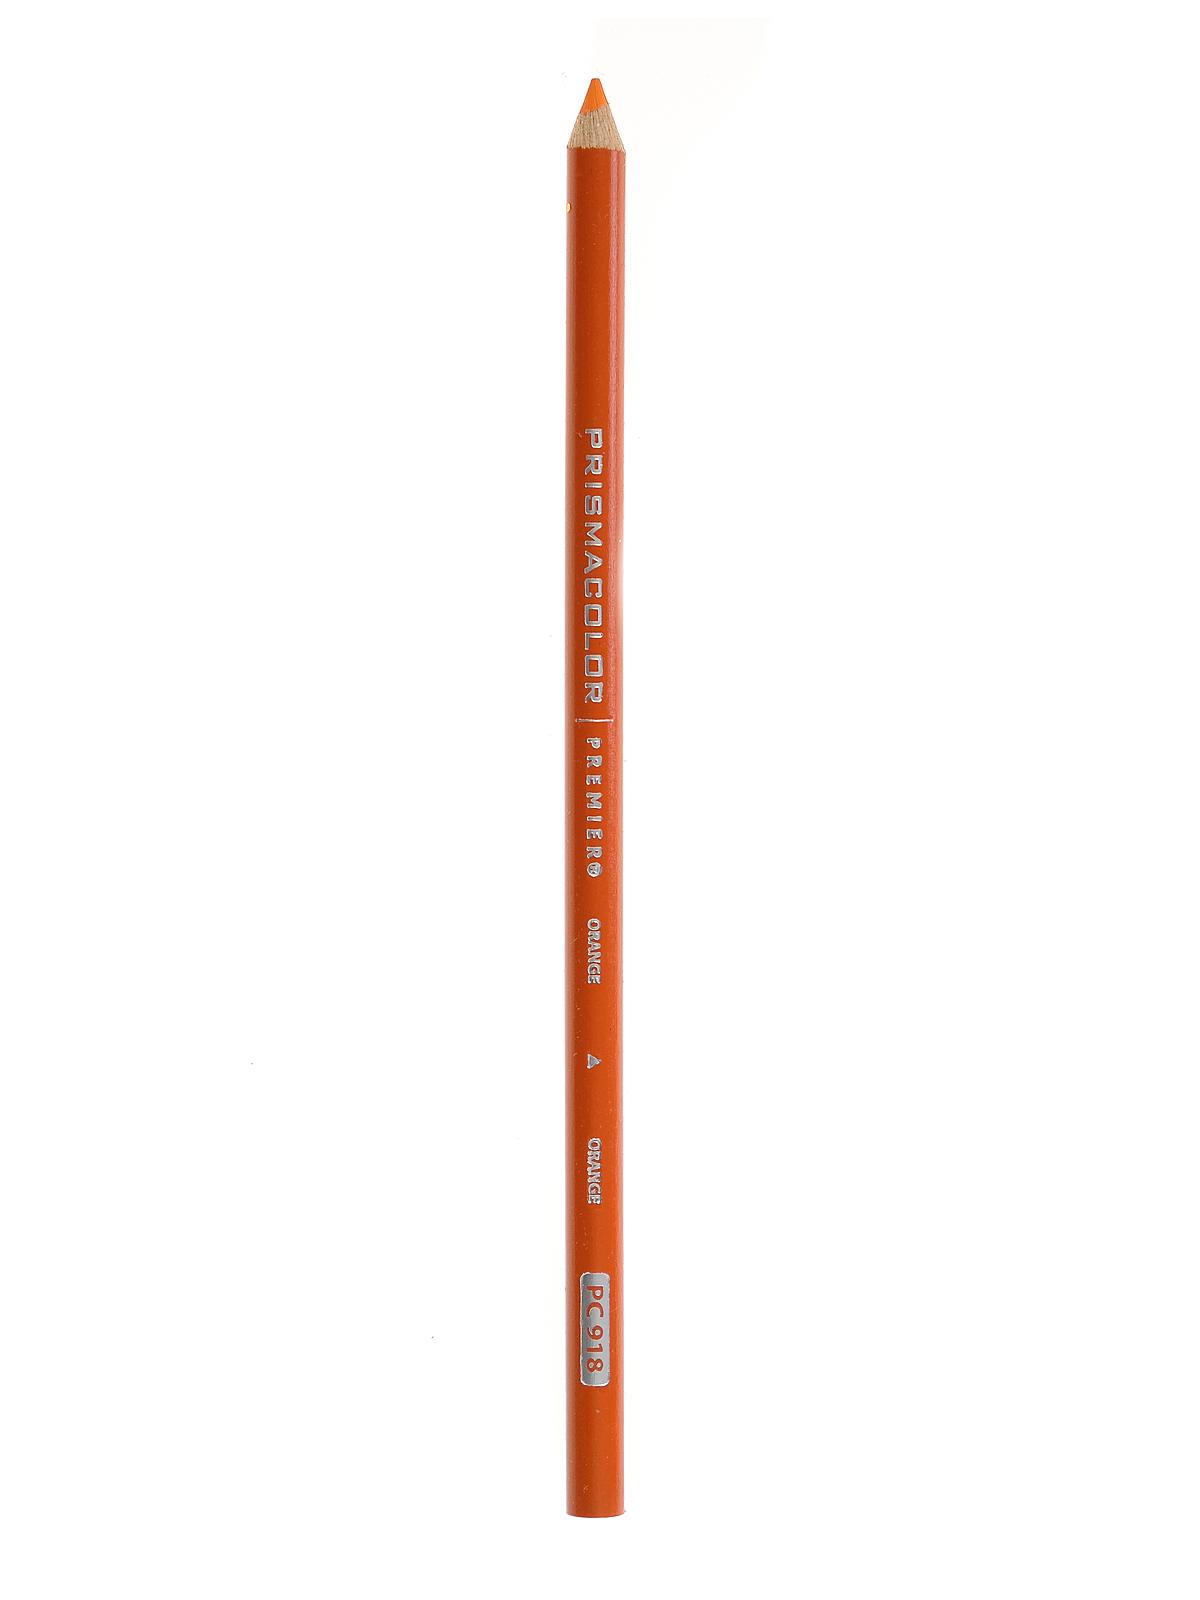 Prismacolor Premier 12 Colored Pencils — Another set of colored pencils!